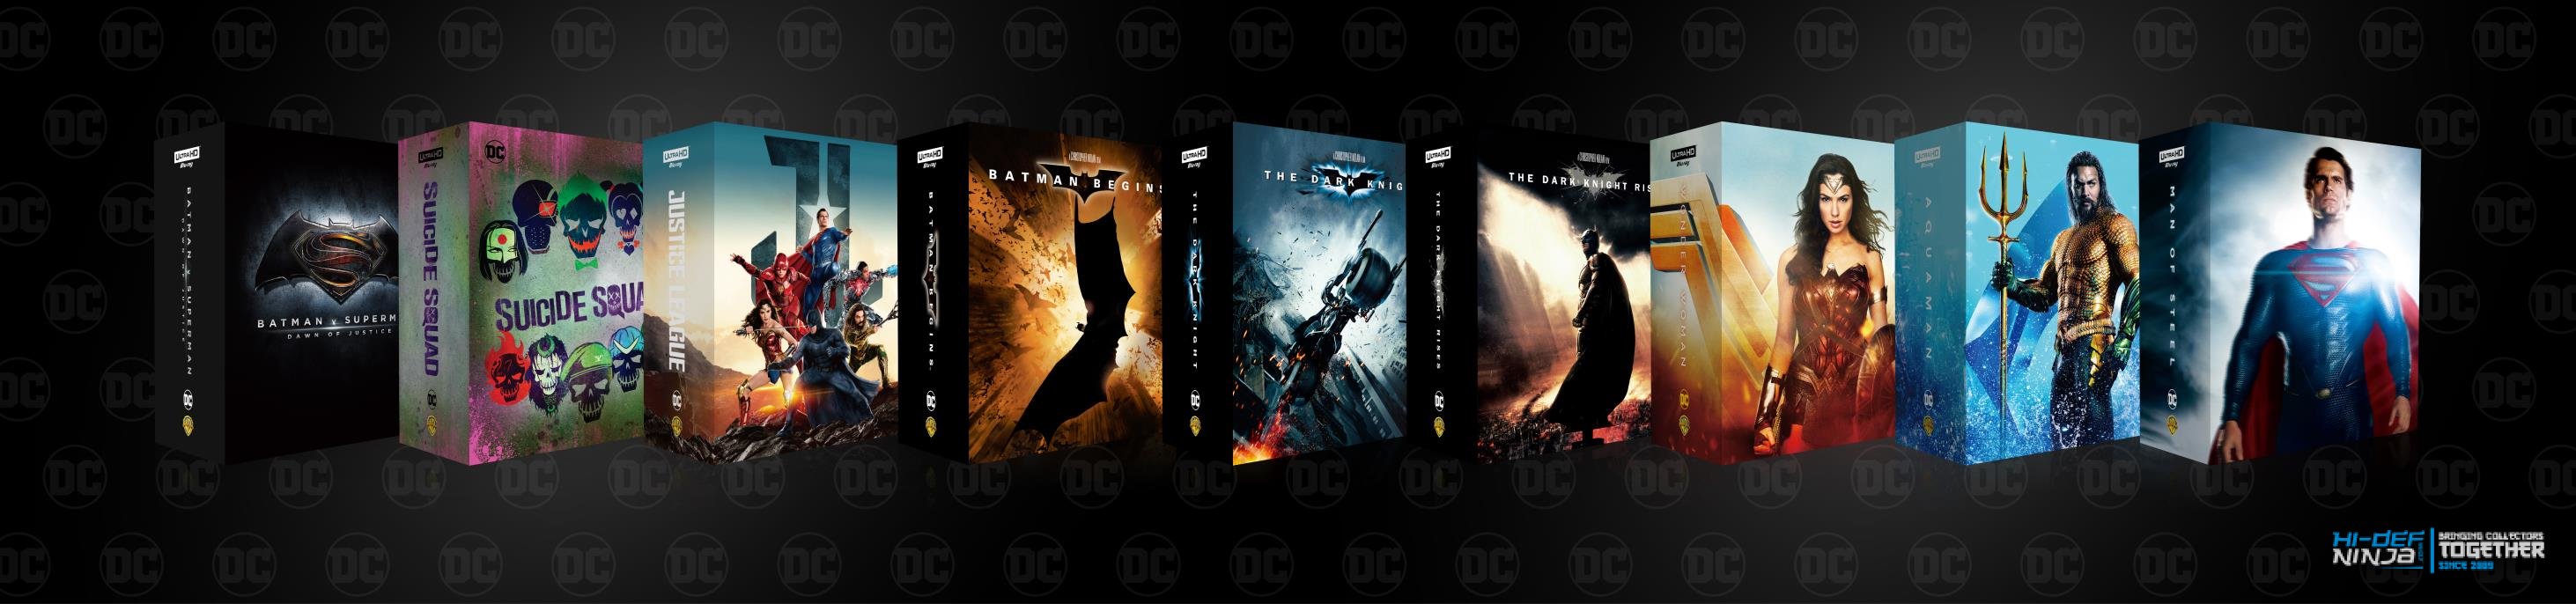 DC series.jpg